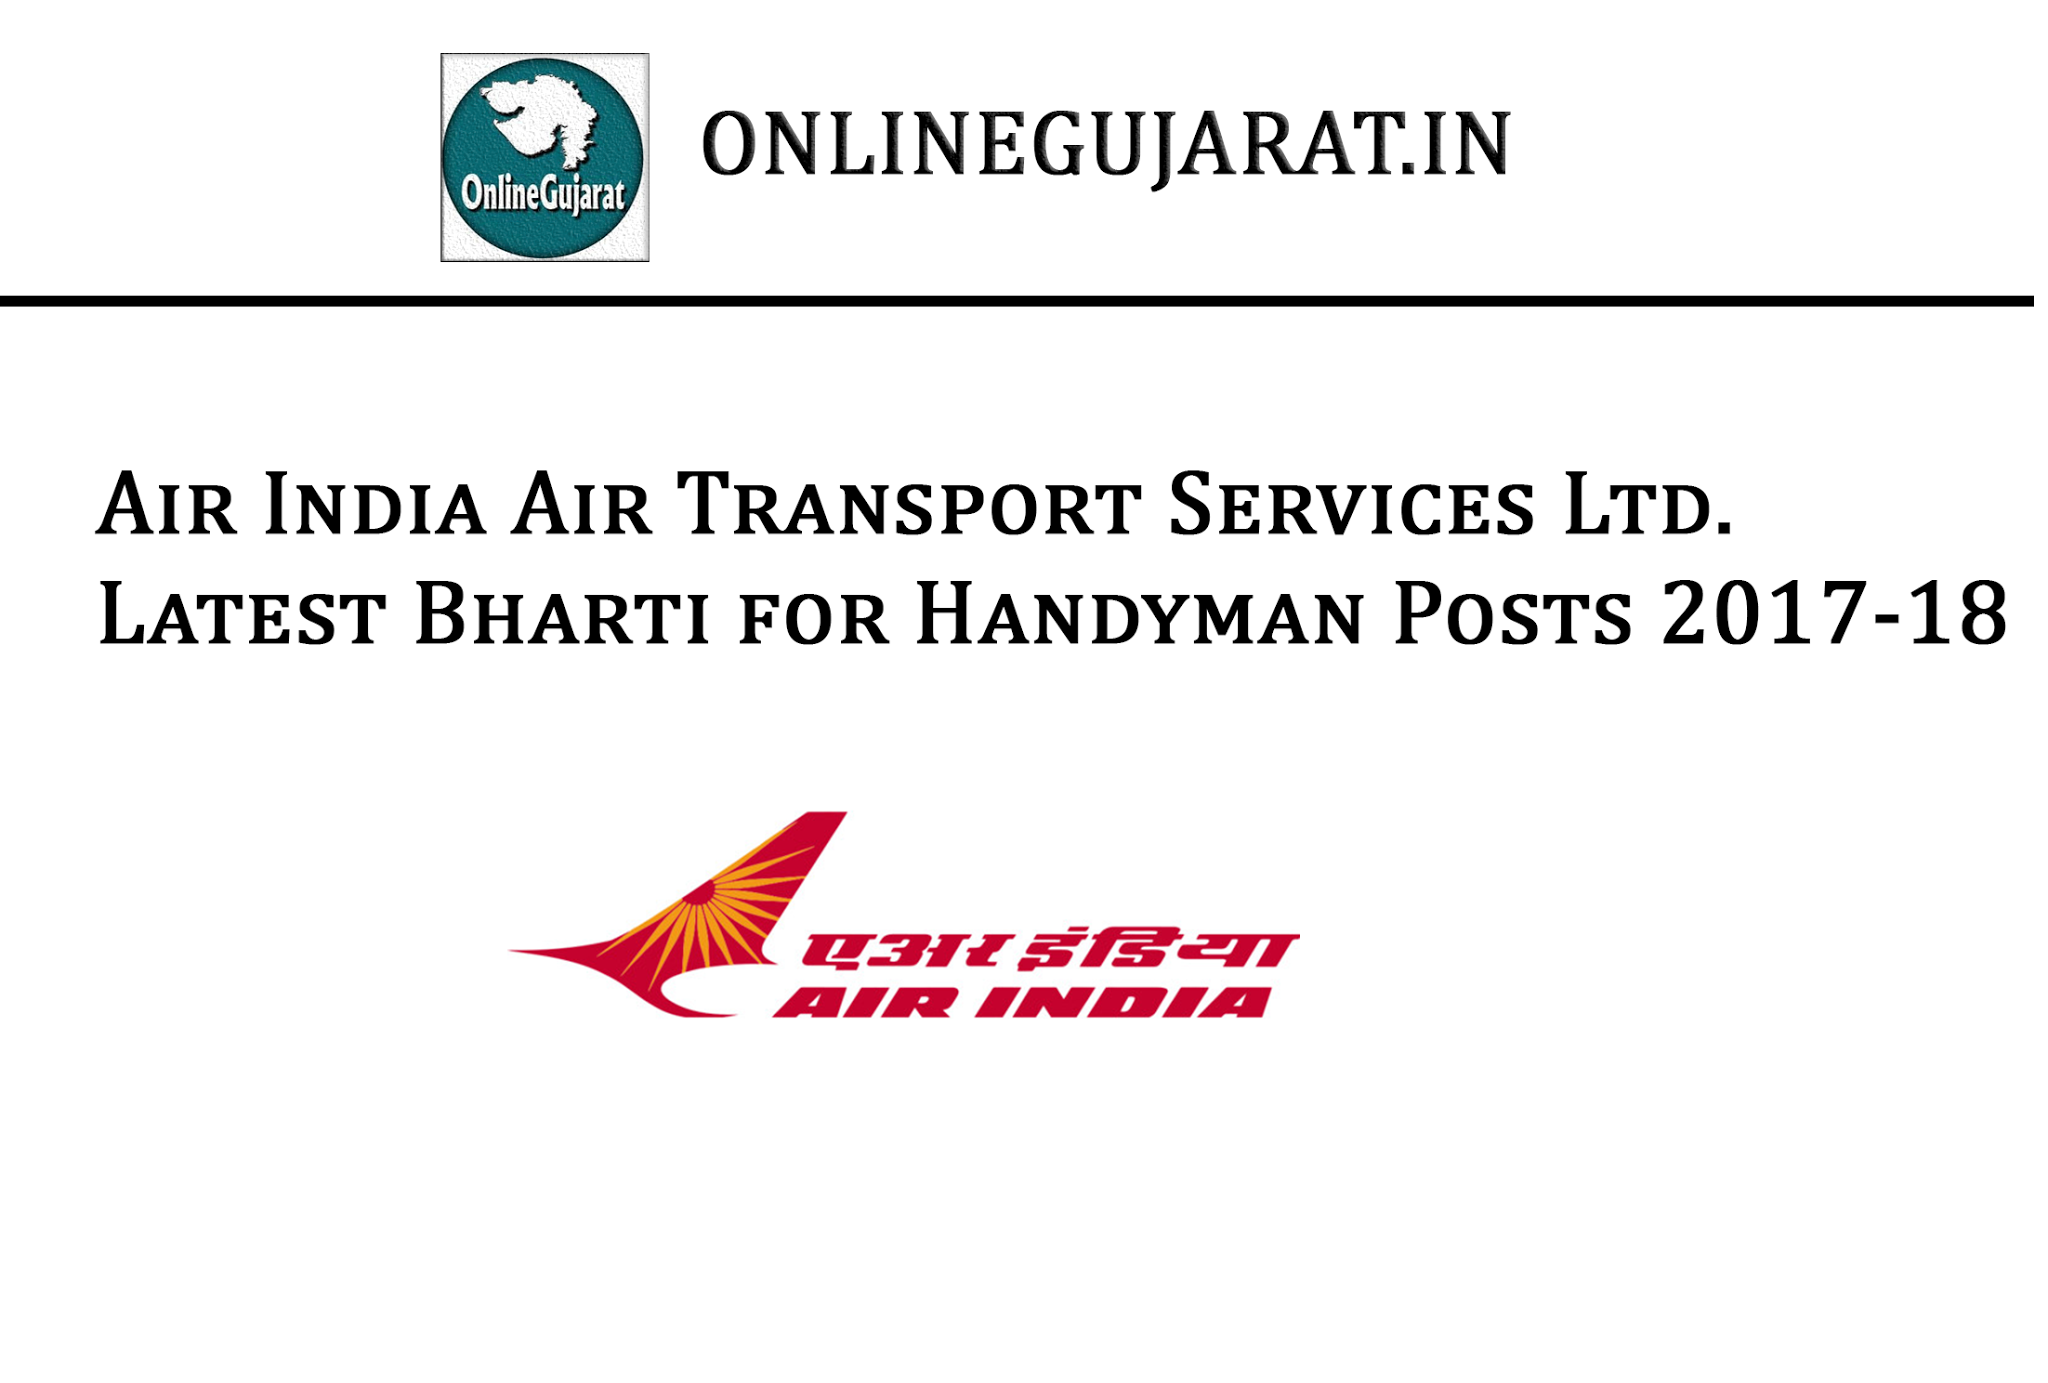 air-india-air-transport-services-ltd-latest-bharti-for-handyman-posts-2017-18-online-gujarat